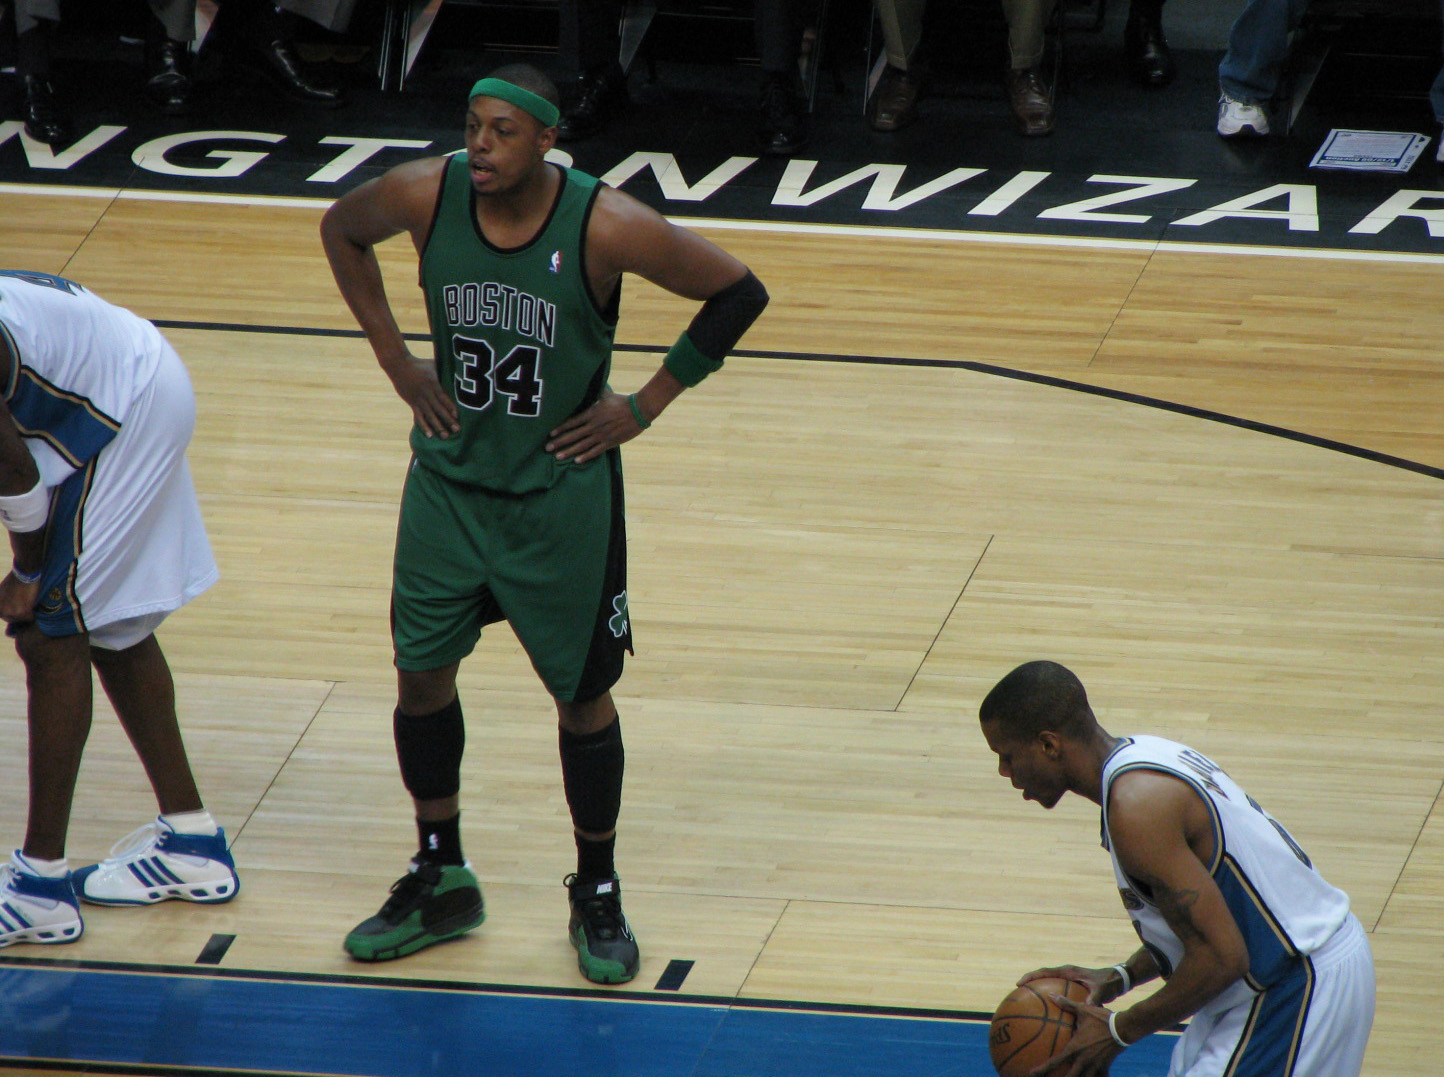 Paul Pierce outscores the Nets in classic Celtics' 4th quarter